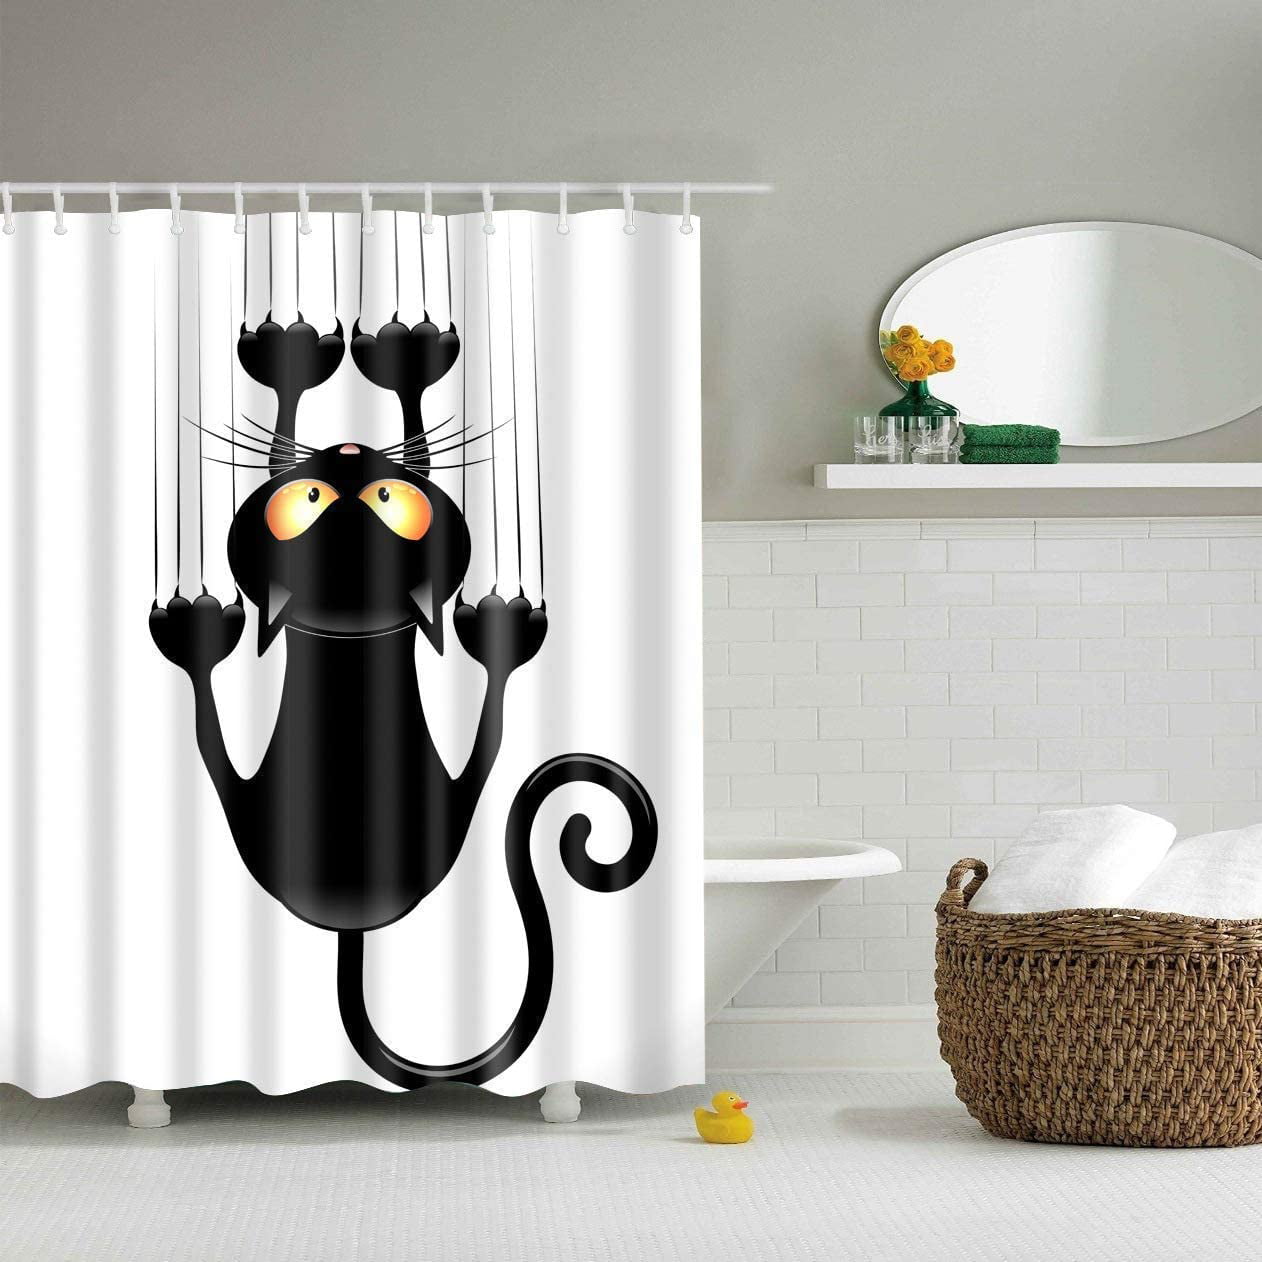 71"/180*180cm Waterproof fabric Shower Curtain Bathroom home decor Cat bathing 